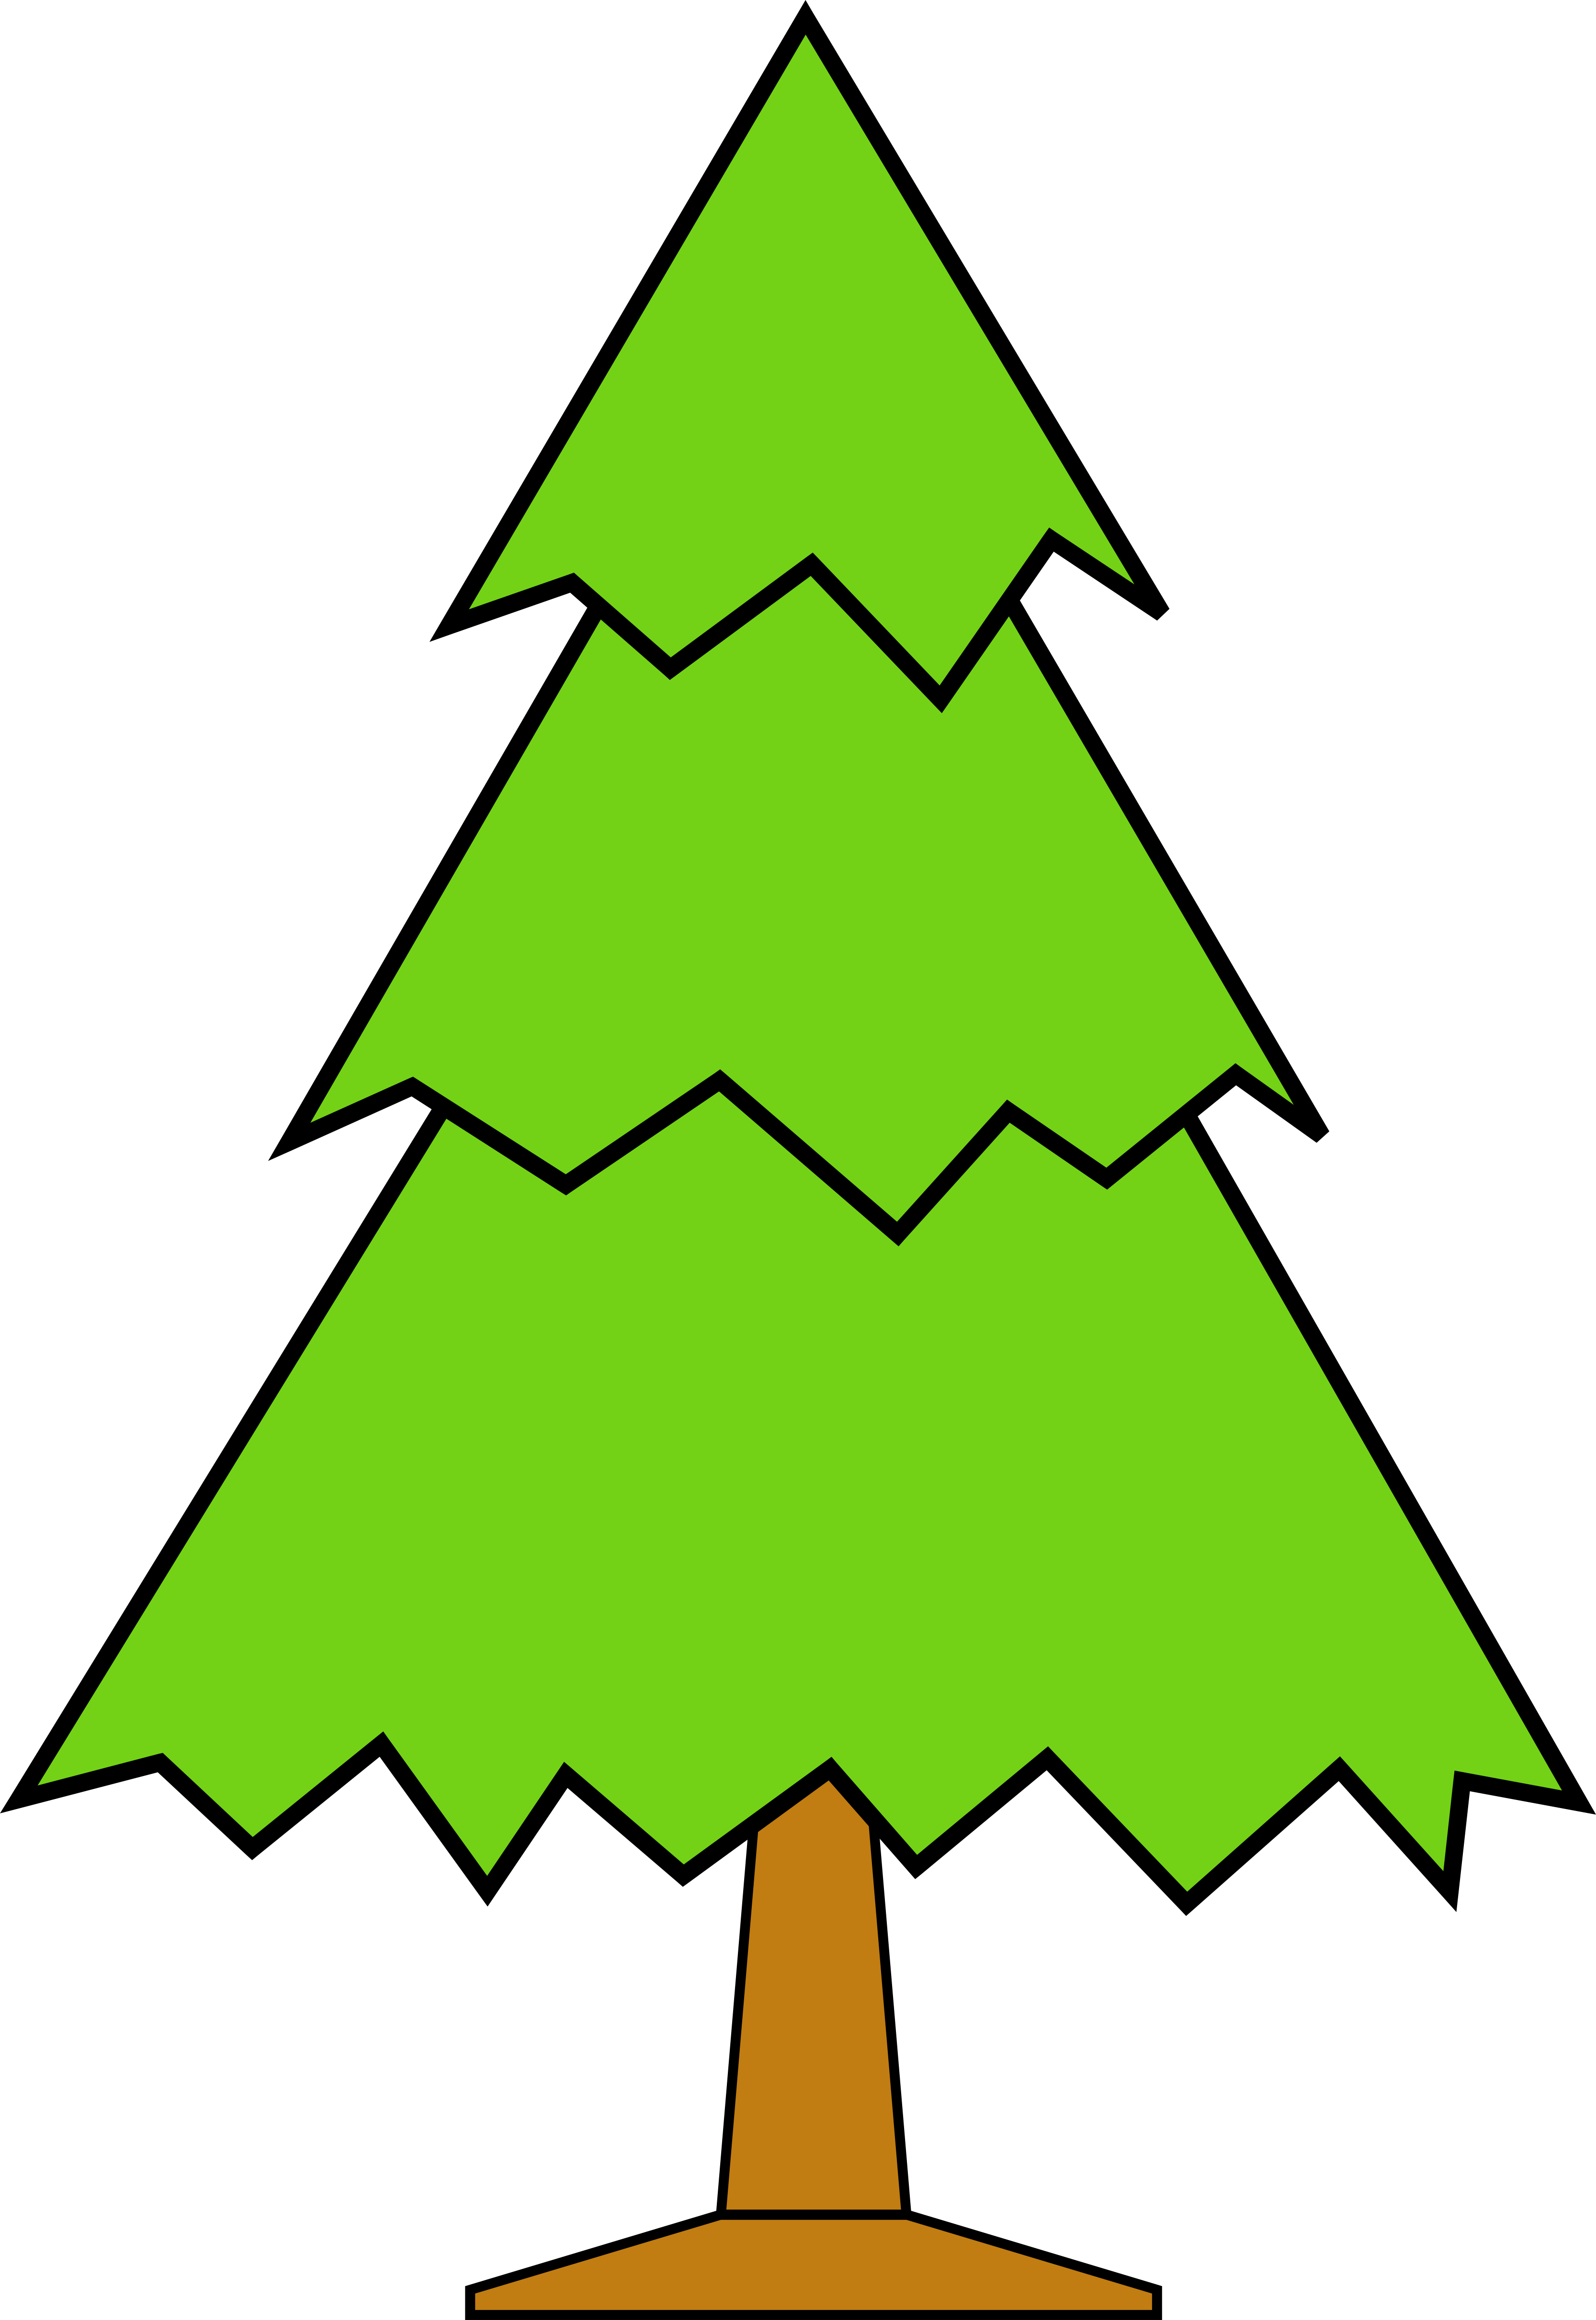 61 Free Christmas Tree Clip Art